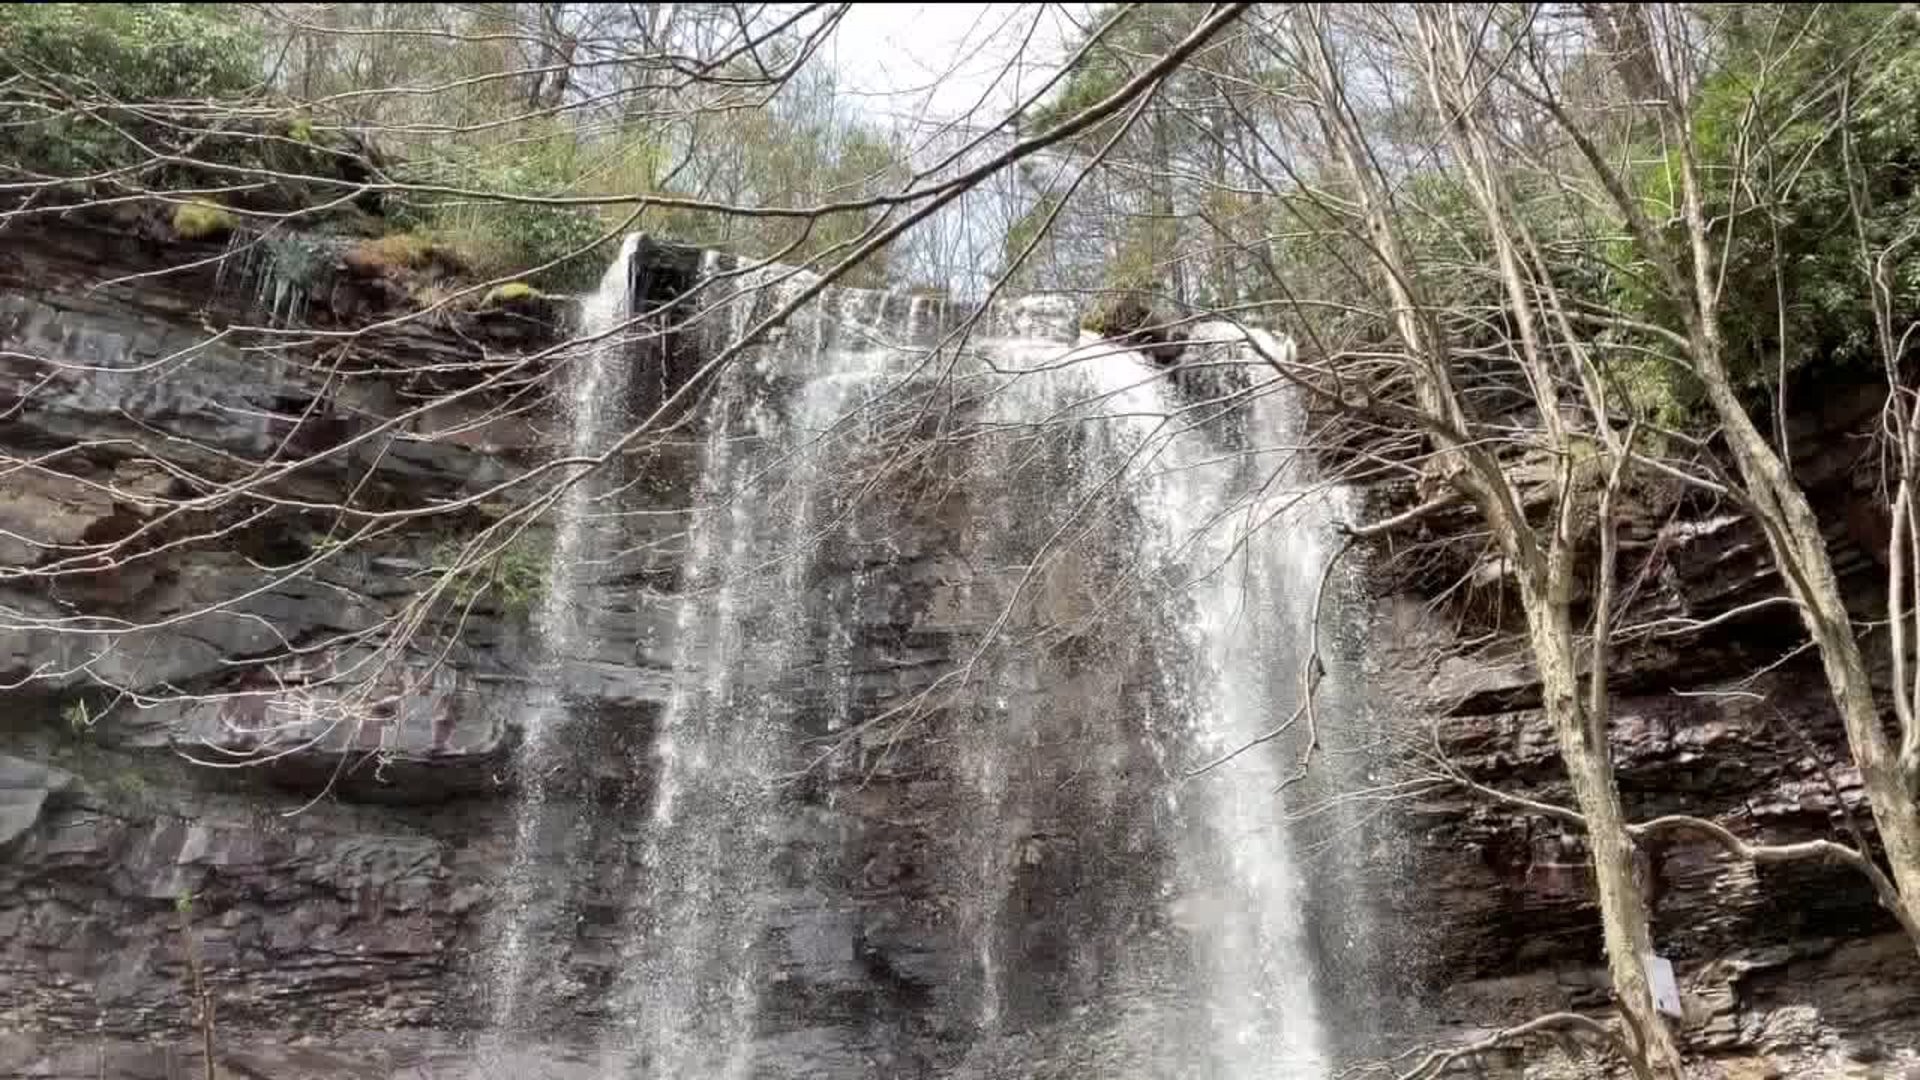 Hiking the Glen Onoko Falls Trail On The Pennsylvania Road